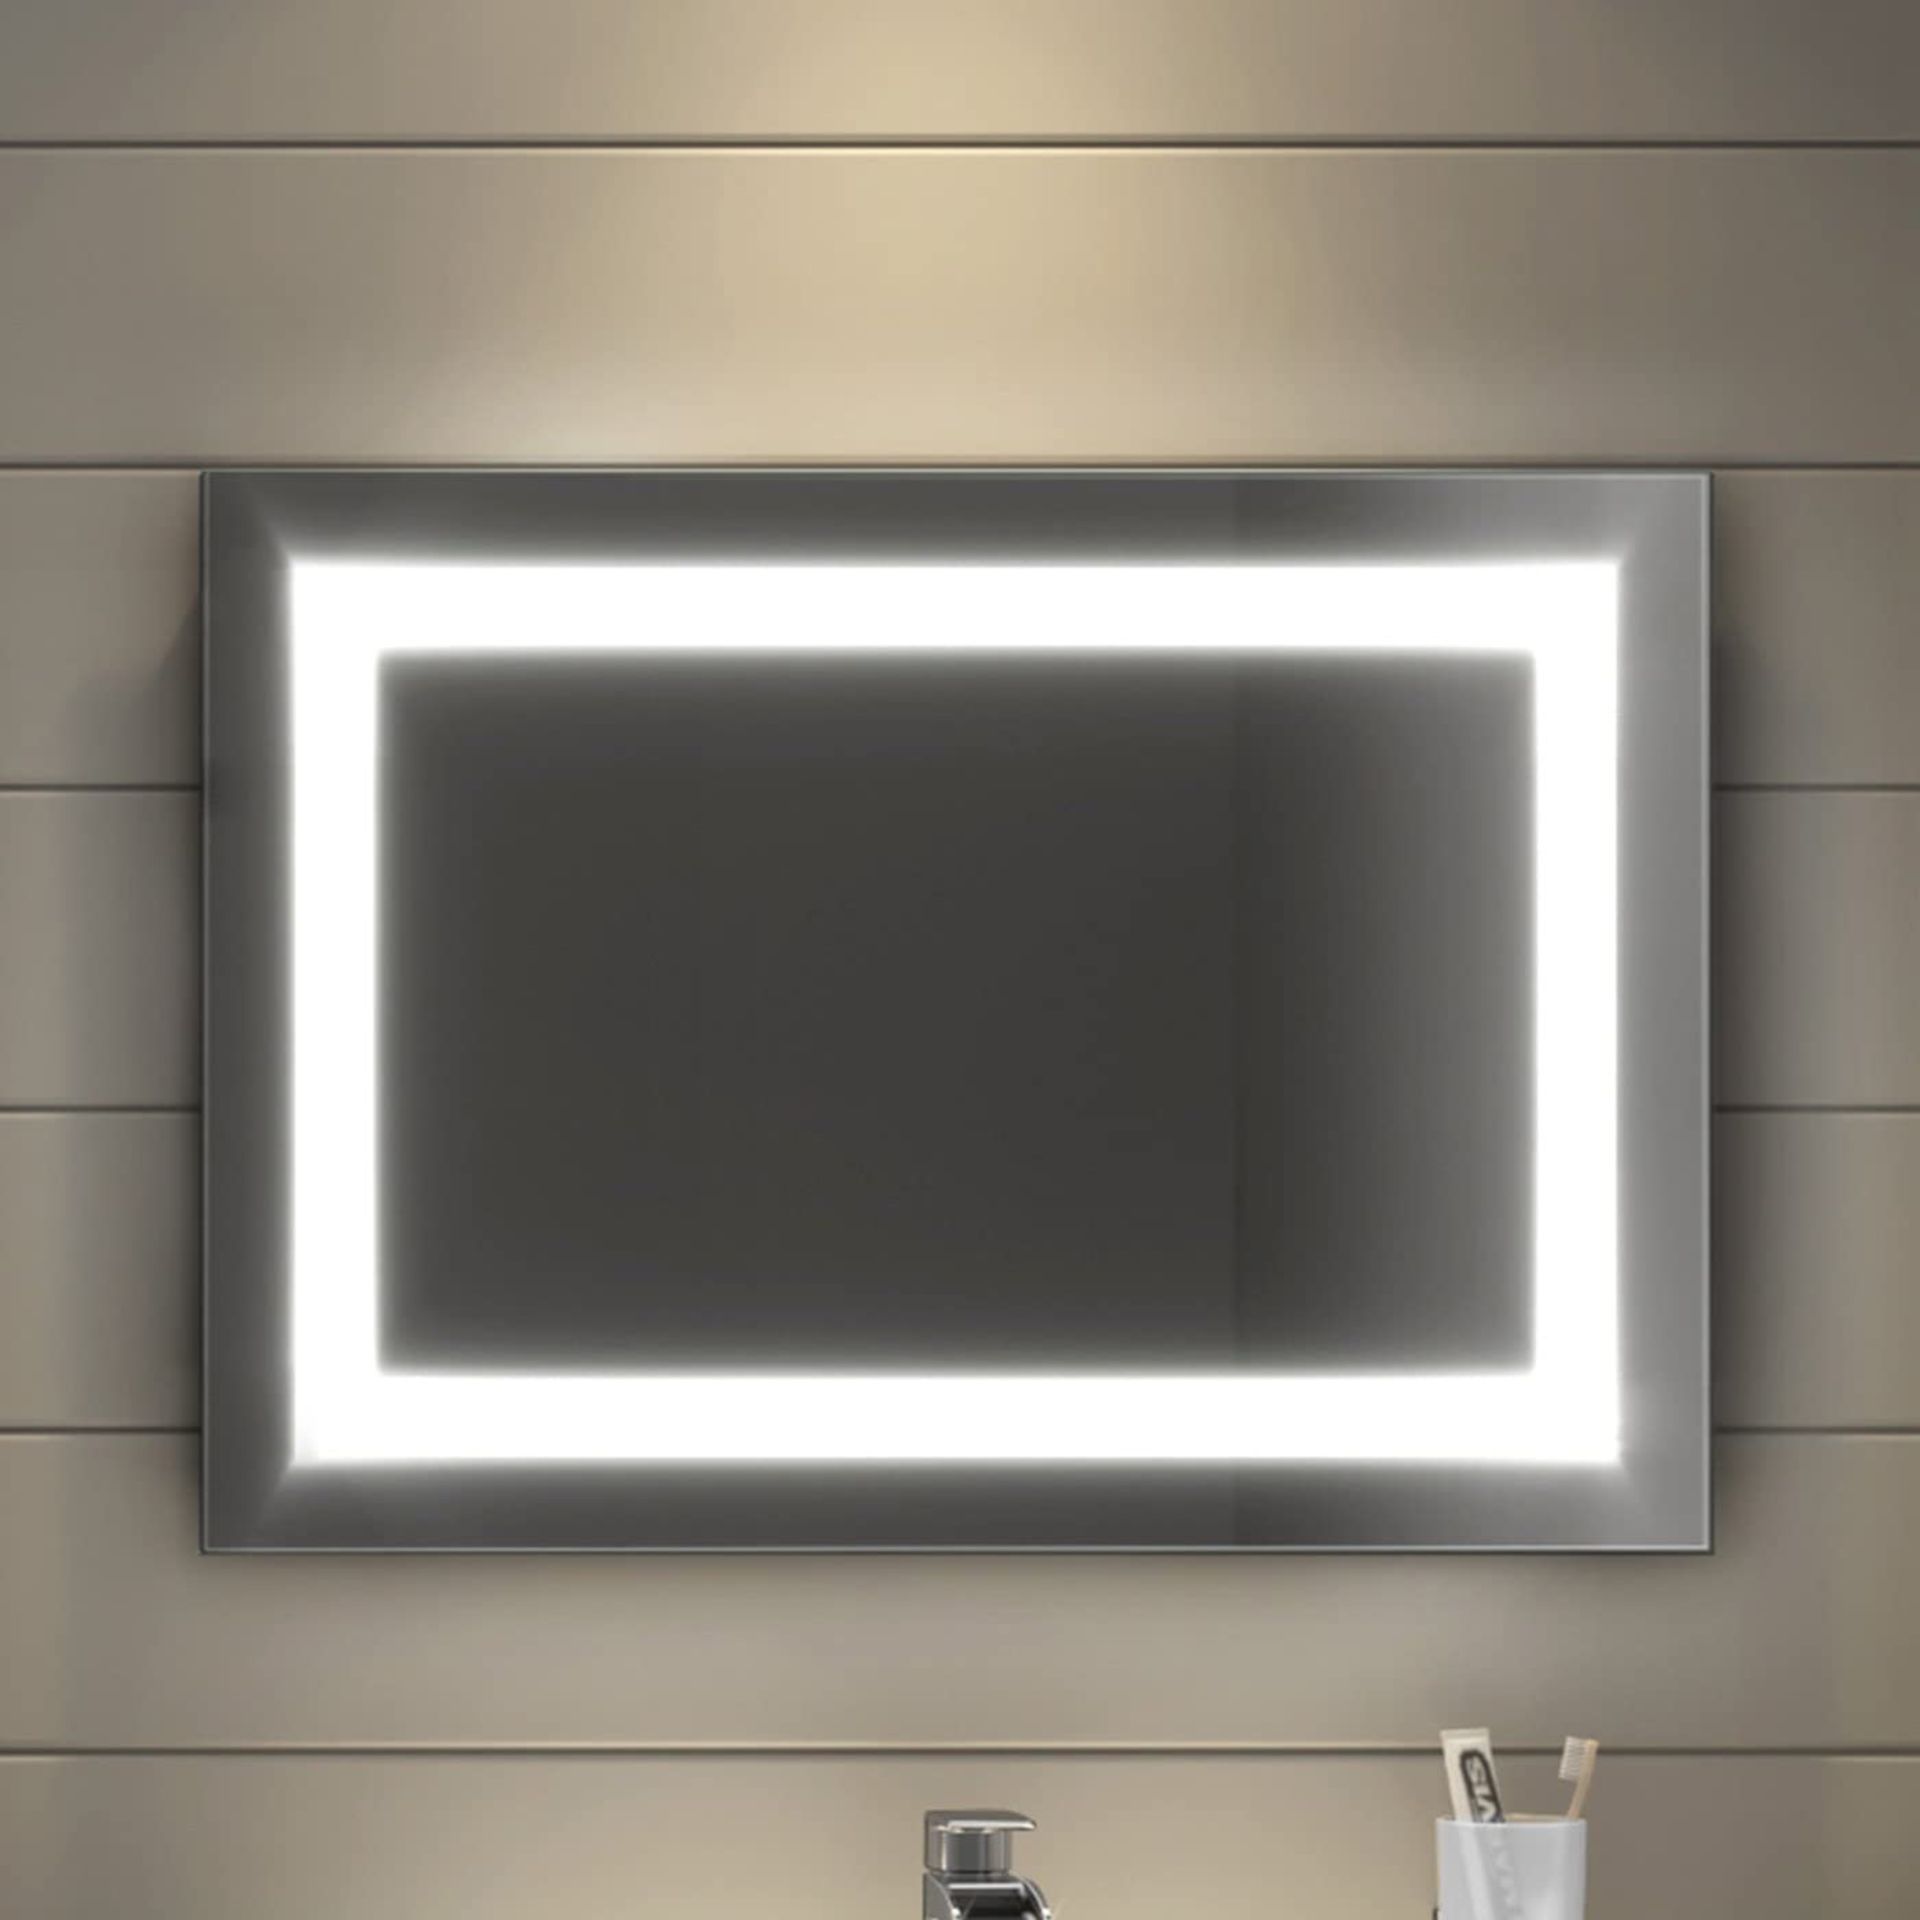 New & Boxed 500x700mm Modern Illuminated Backlit Led Light Bathroom Mirror + Demister Pad. RRP... - Image 3 of 3